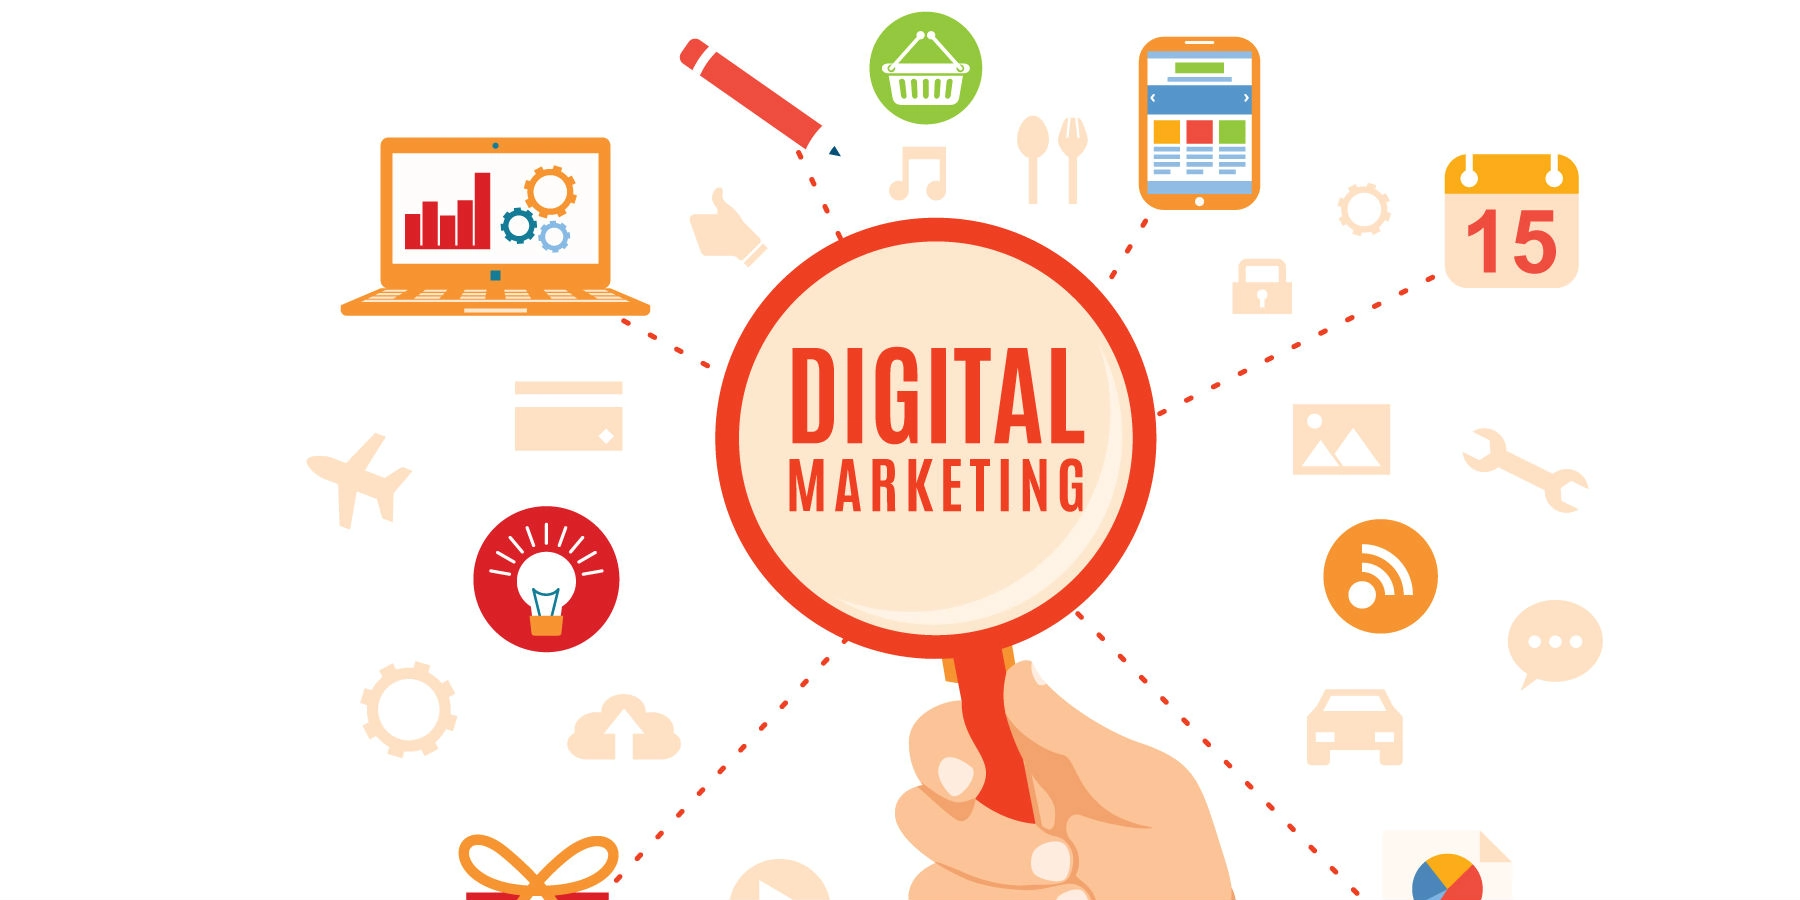 Digital marketing agencies in bangalore source - fangdigital